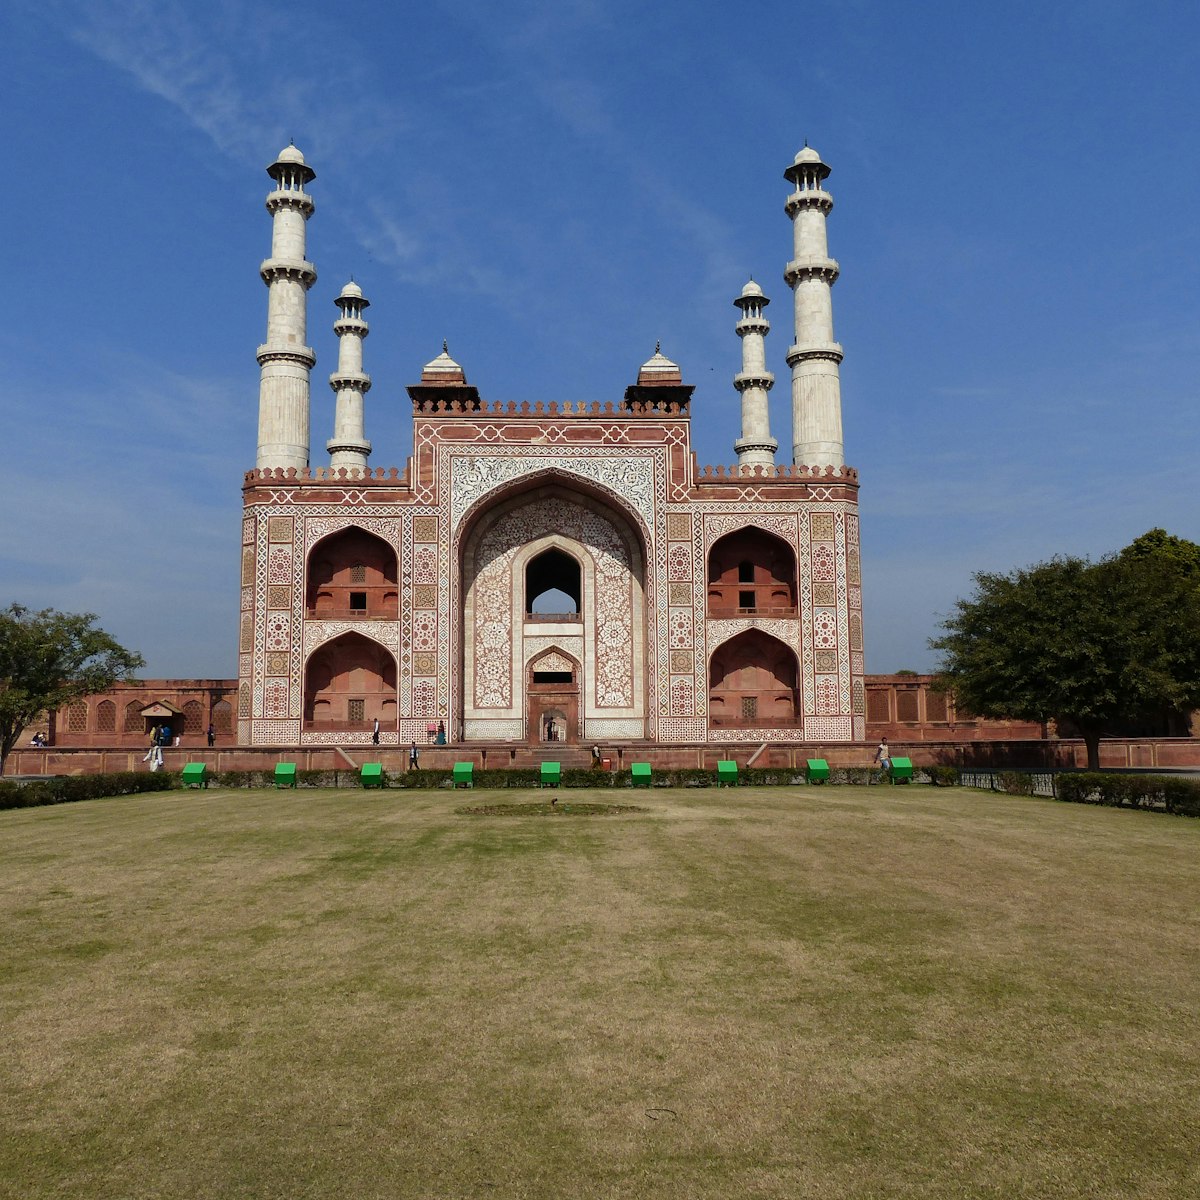 Akbar mausoleum, Sikandra near Agra, Uttar Pradesh, India, South Asia